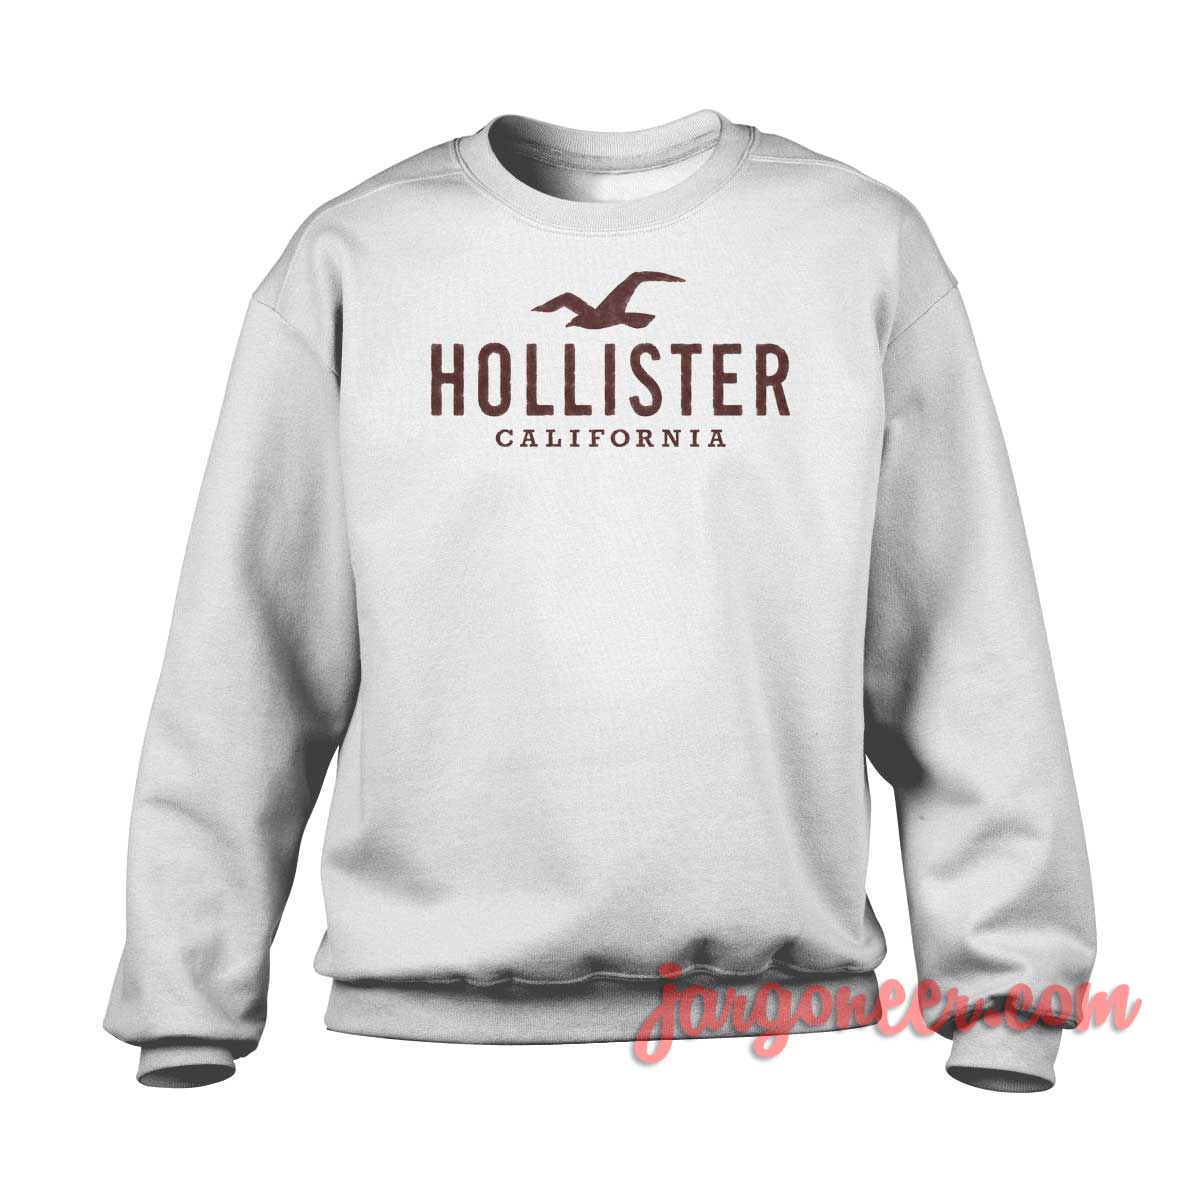 hollister california hoodies